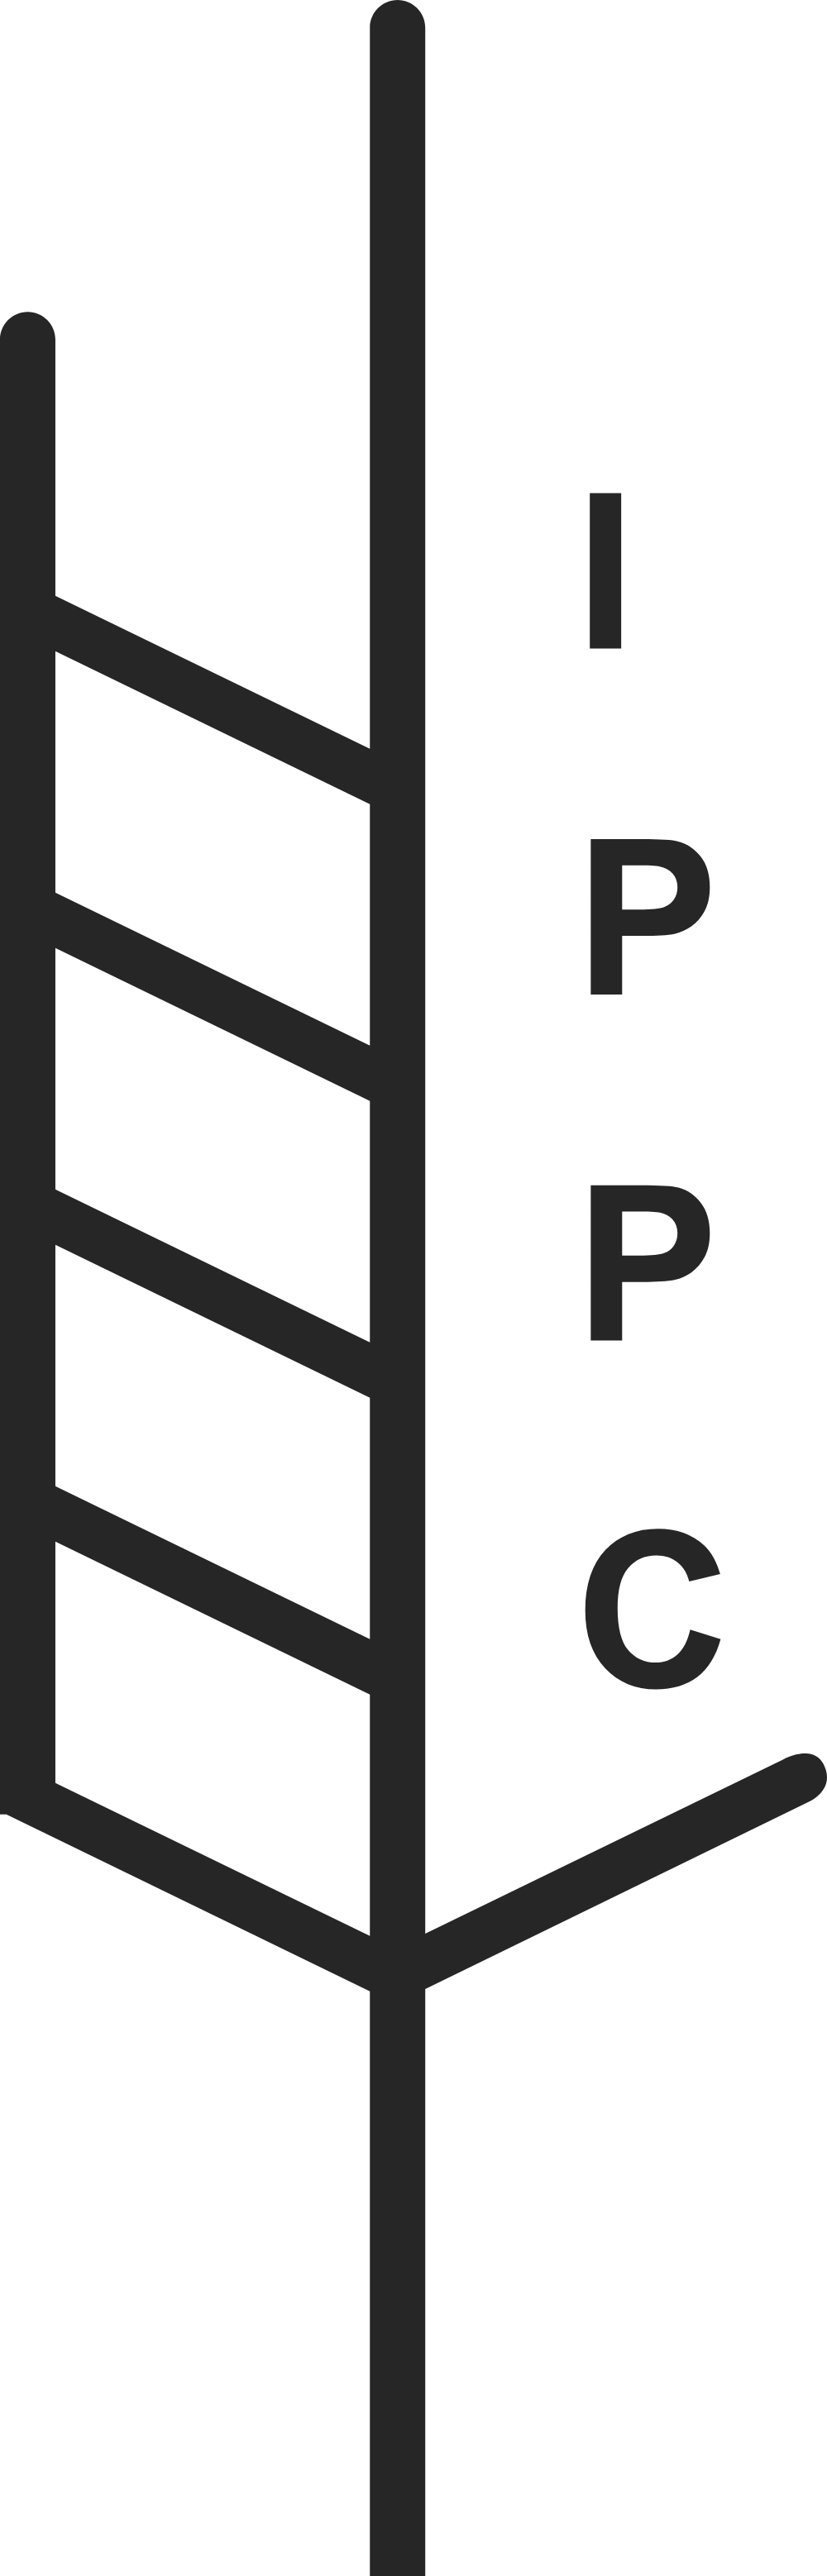 International Plant Protection Convention (IPPC) Logo Logos